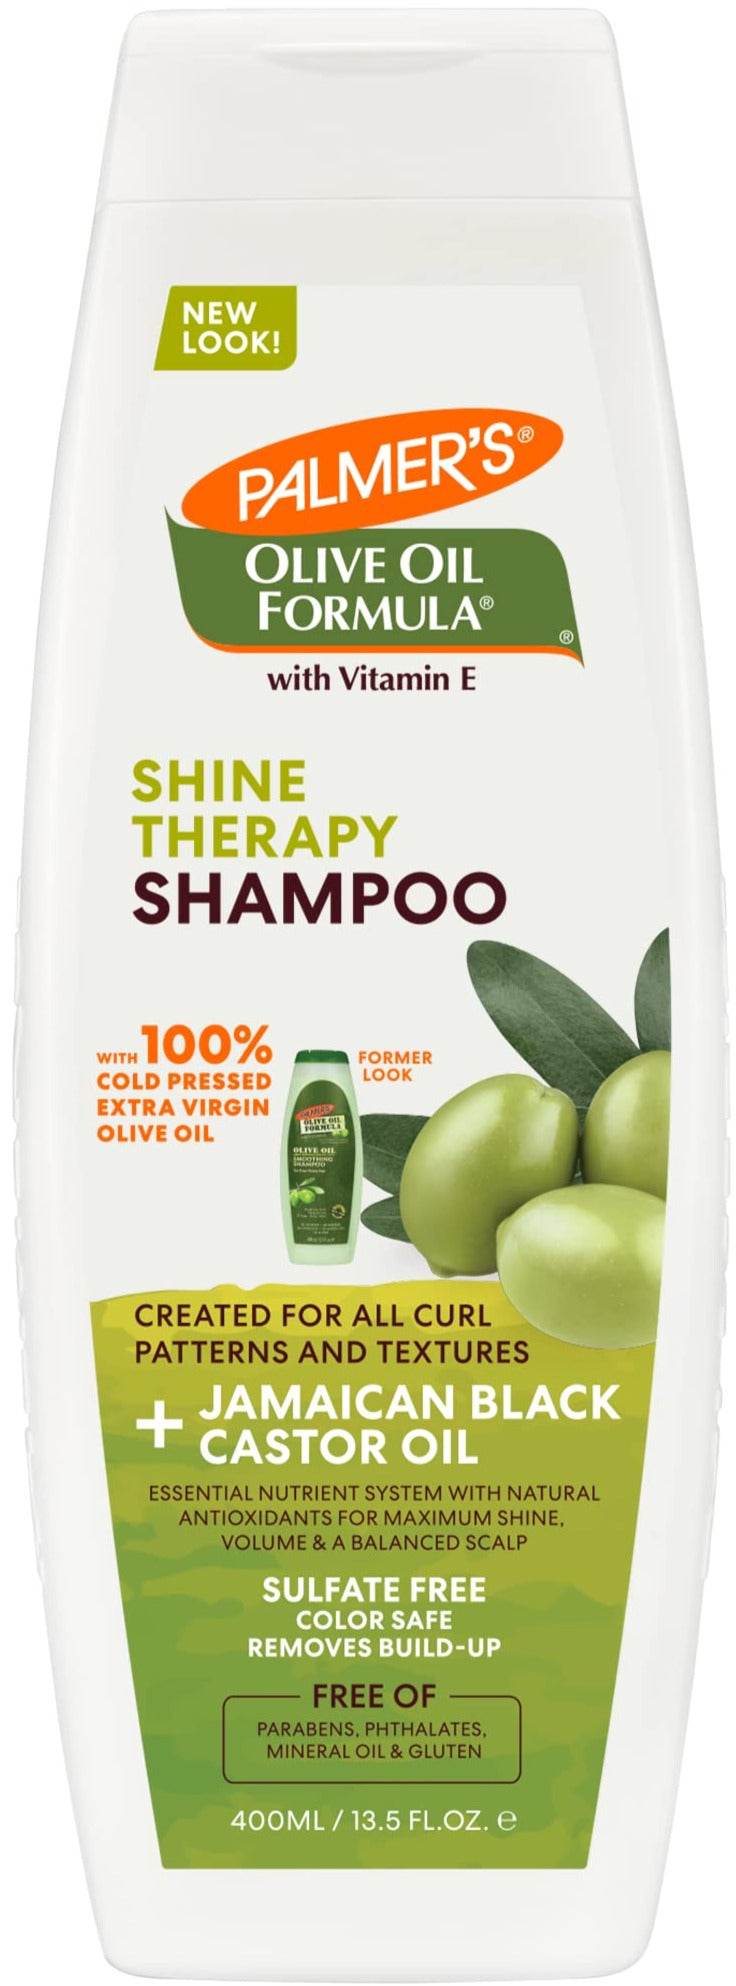 Palmers Olive Oil Formula Shampoo 400ml Shine Therapy